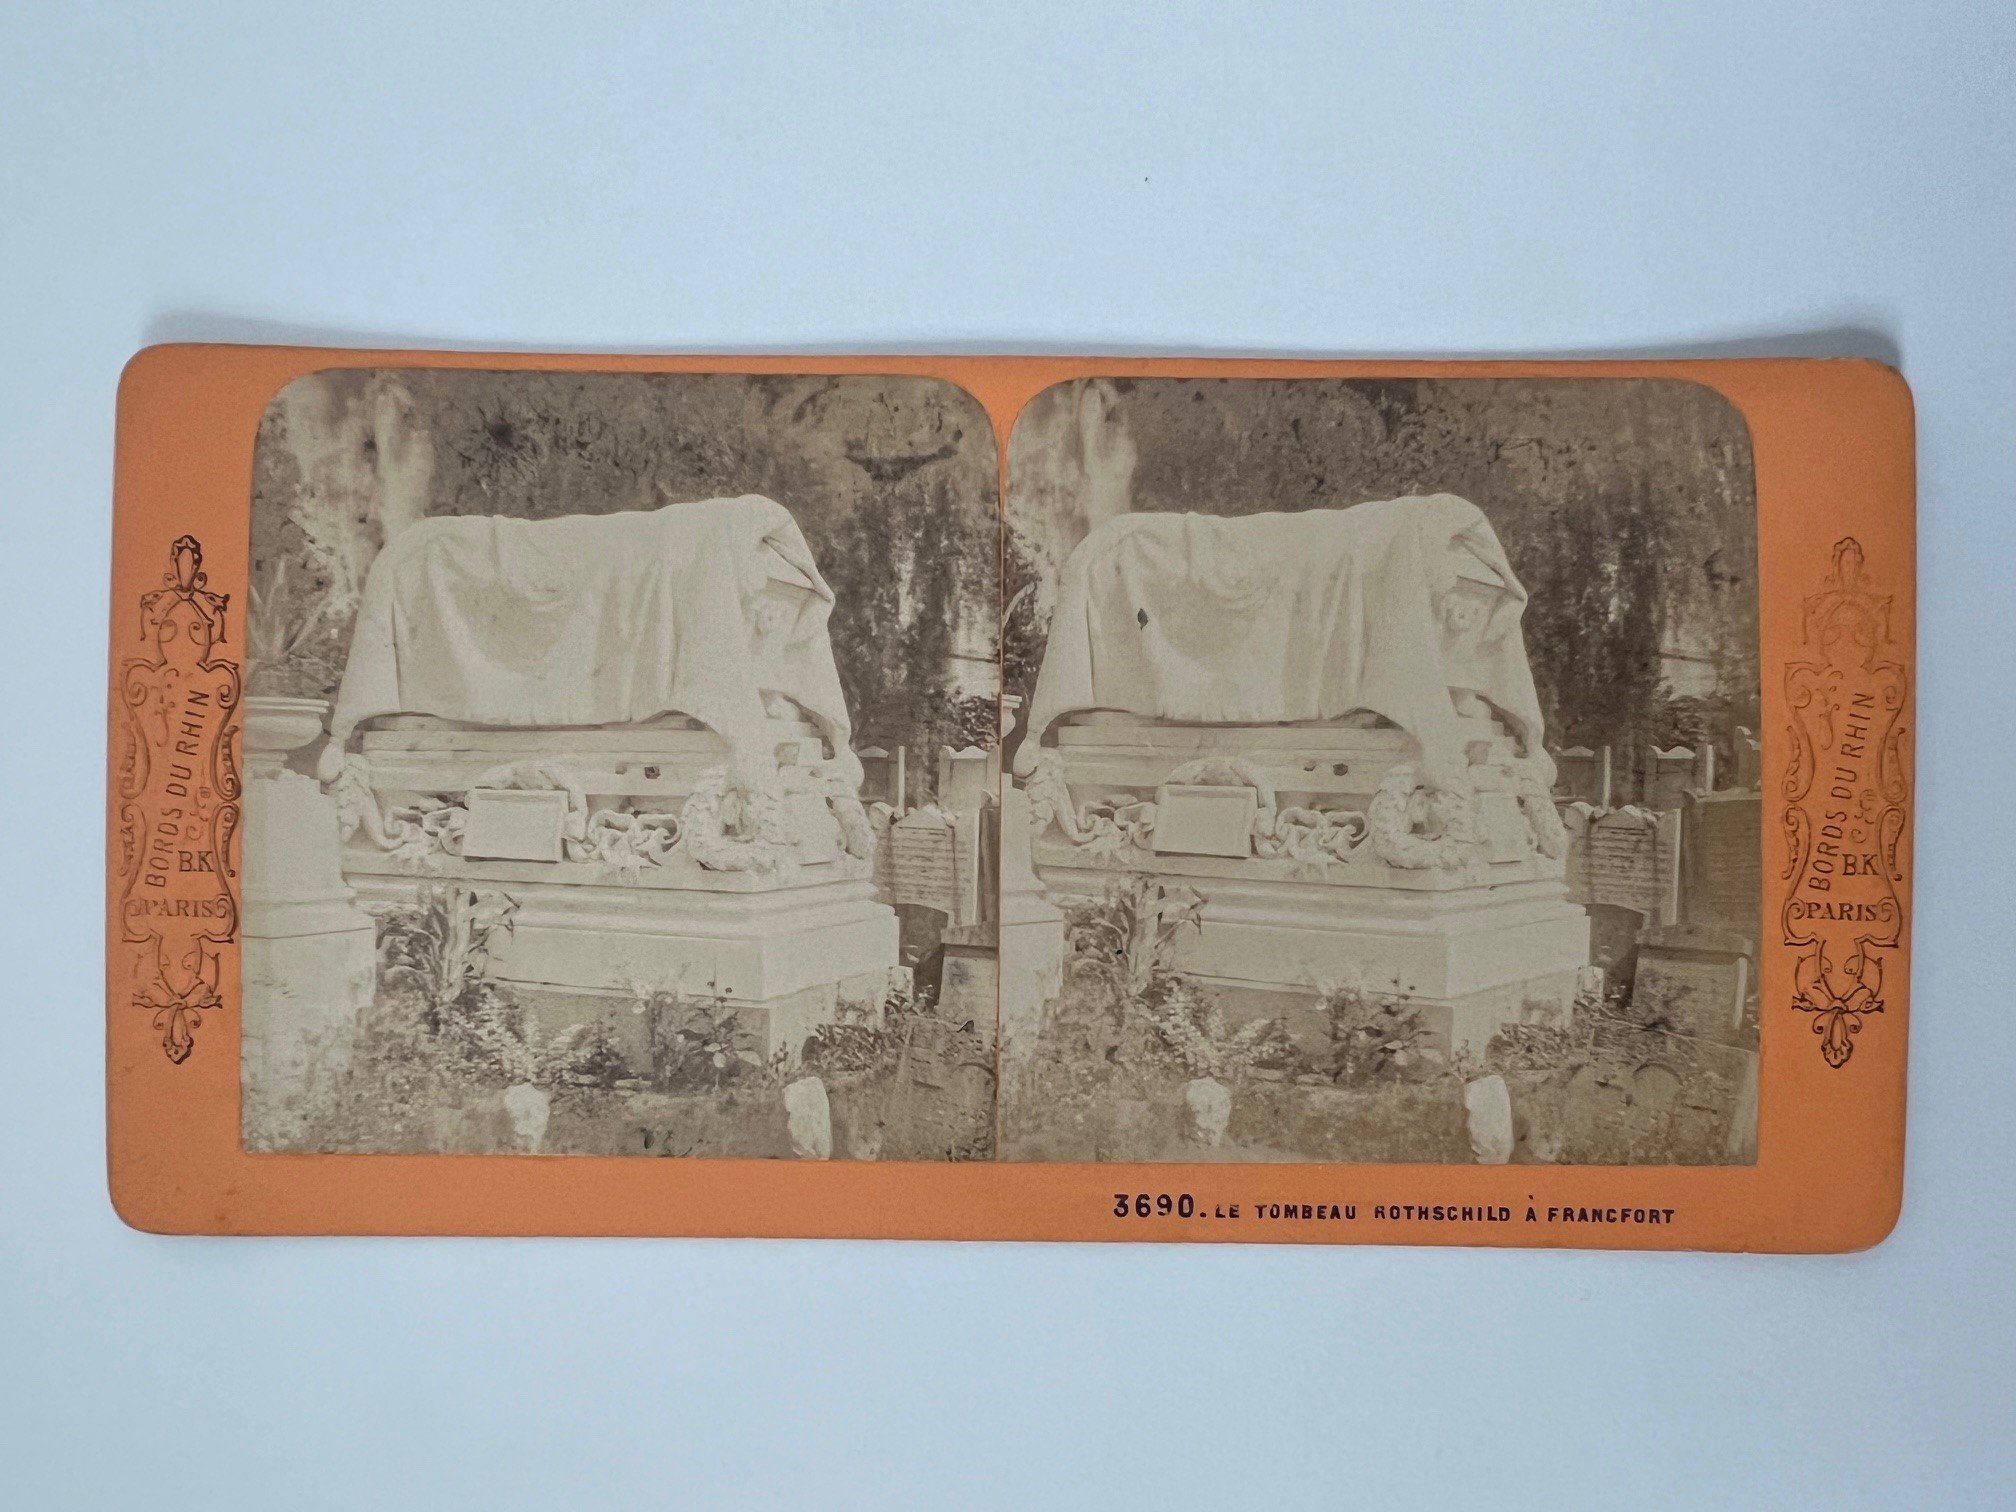 Stereobild, Unbekannter Fotograf (B. K.), Frankfurt, Le tombeau Rothschild a Francfort, ca. 1875. (Taunus-Rhein-Main - Regionalgeschichtliche Sammlung Dr. Stefan Naas CC BY-NC-SA)